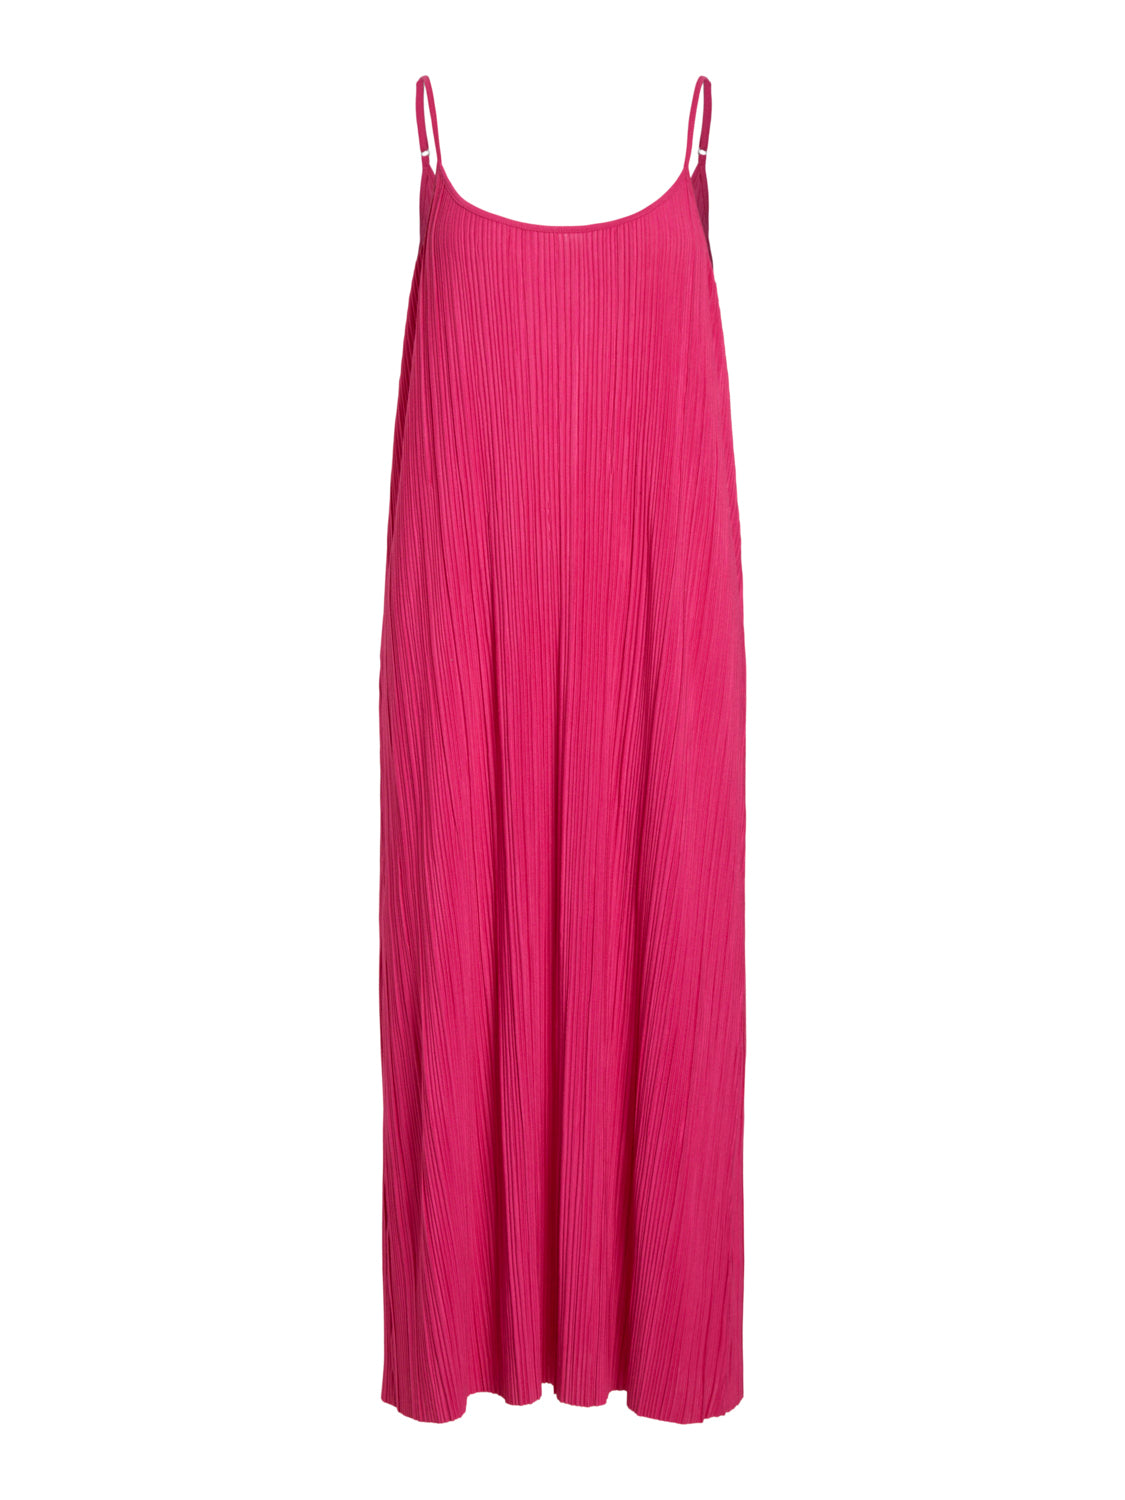 VIPLISA Dress - Pink Yarrow